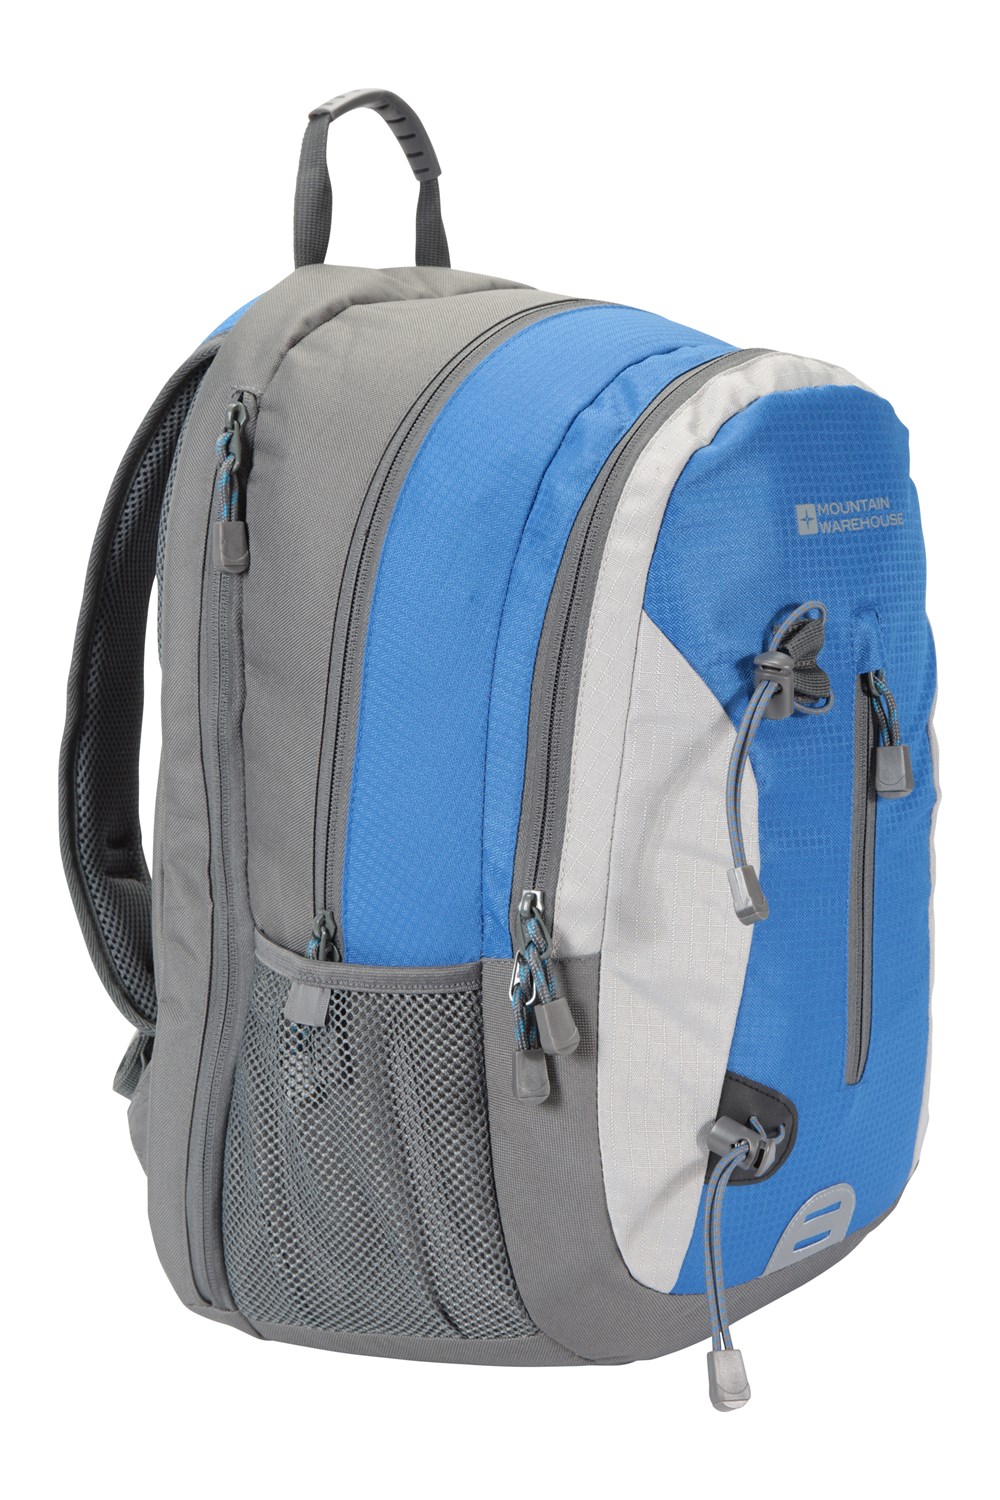 Merlin 23l Backpack | tunersread.com